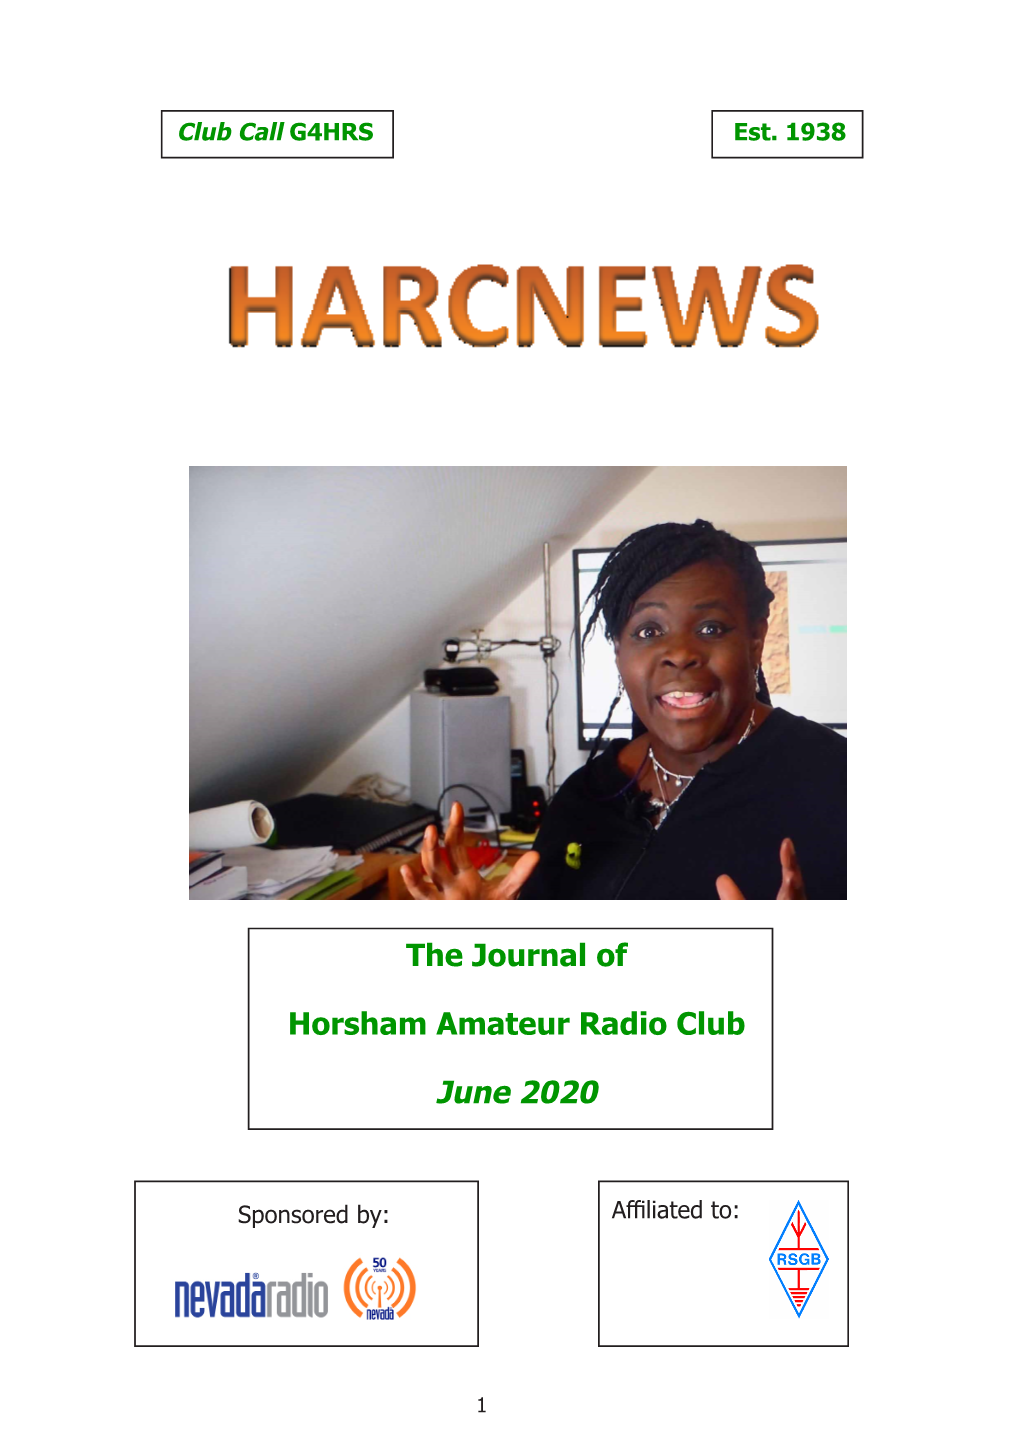 The Journal of Horsham Amateur Radio Club June 2020